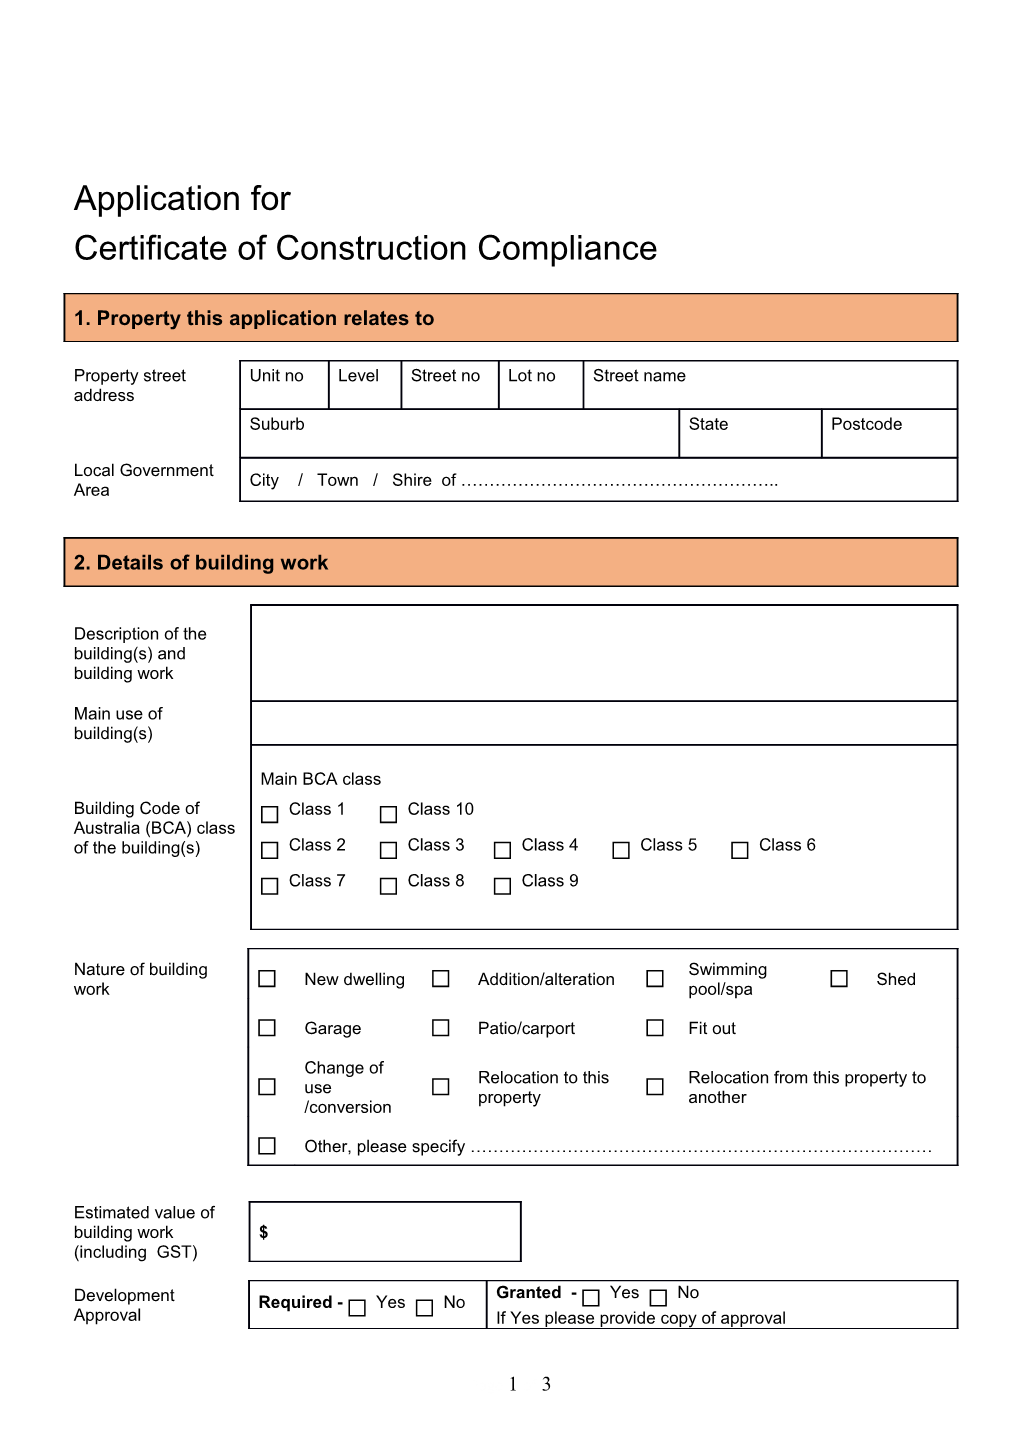 Application Form-CCC